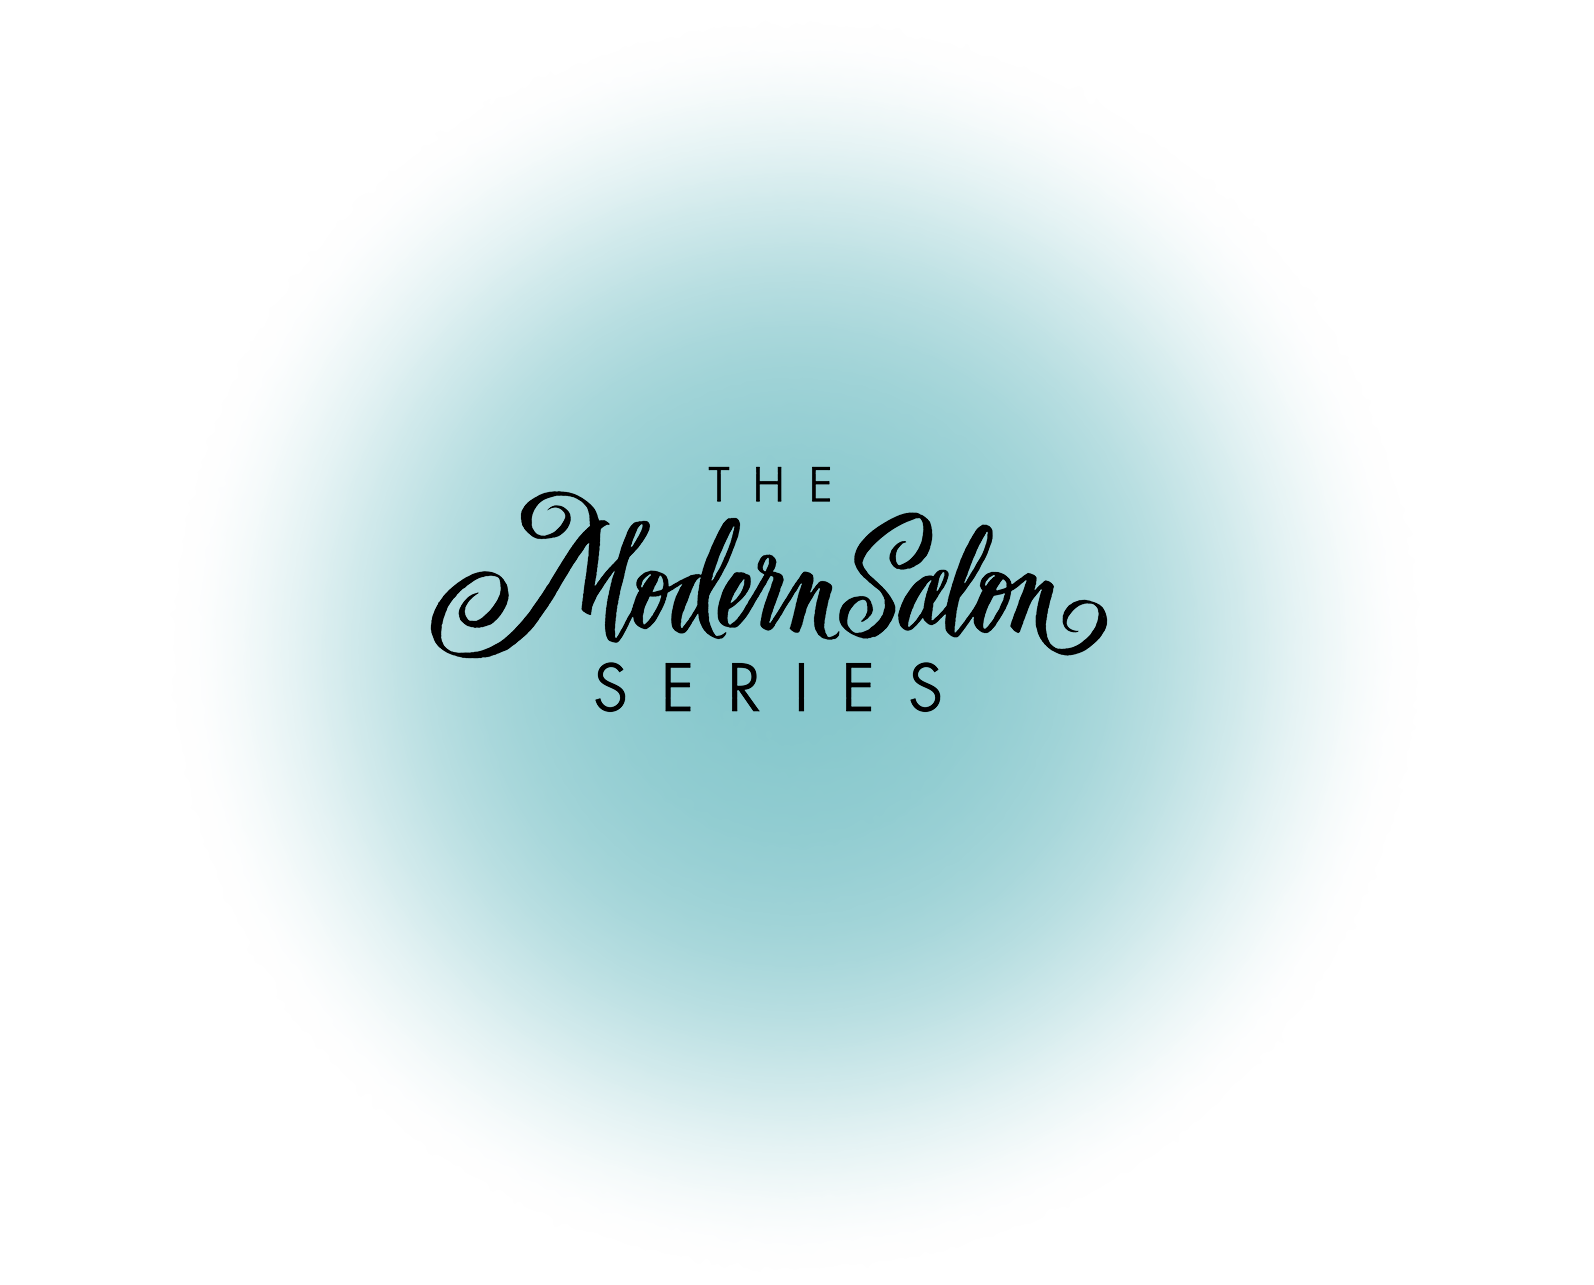 Modern Salon Series logo